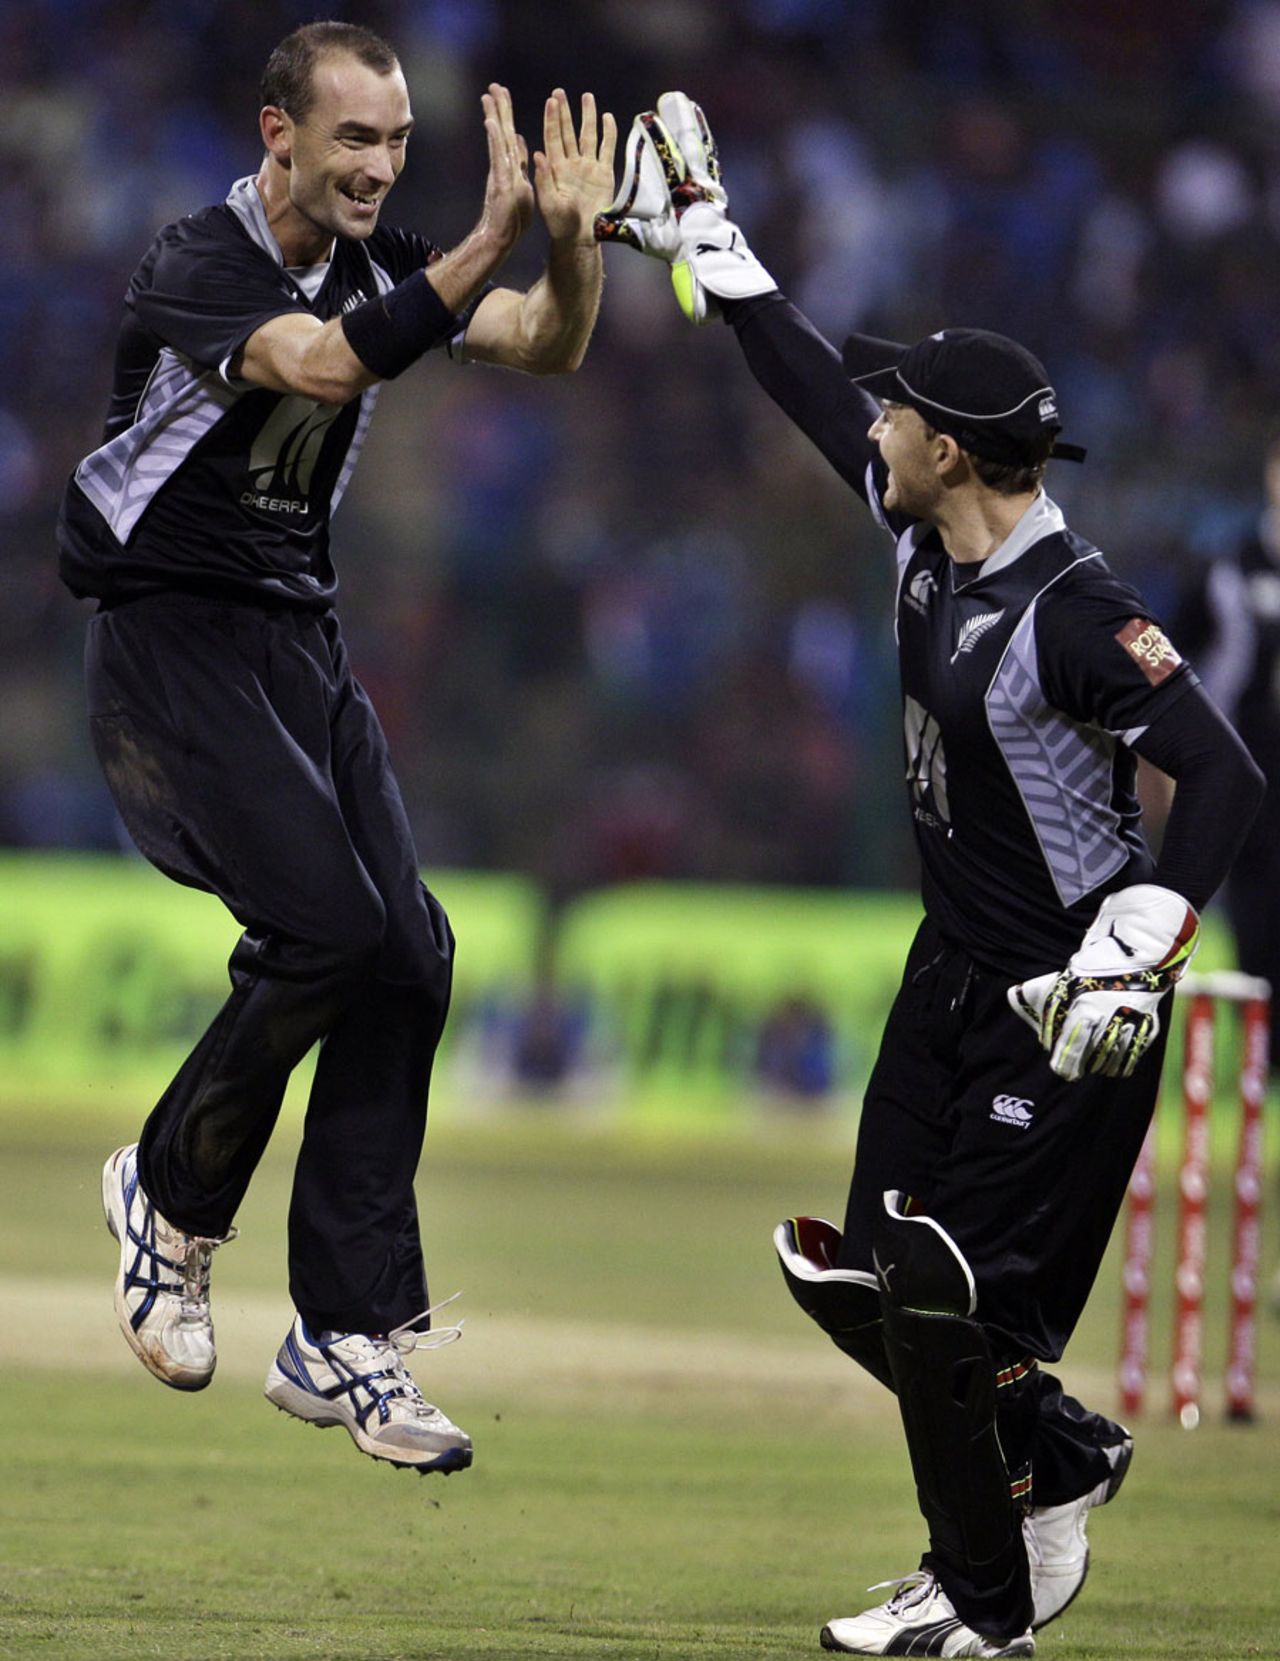 Andy McKay and Brendon McCullum celebrate the wicket of Virat Kohli, India v New Zealand, 4th ODI, Bangalore, December 7, 2010